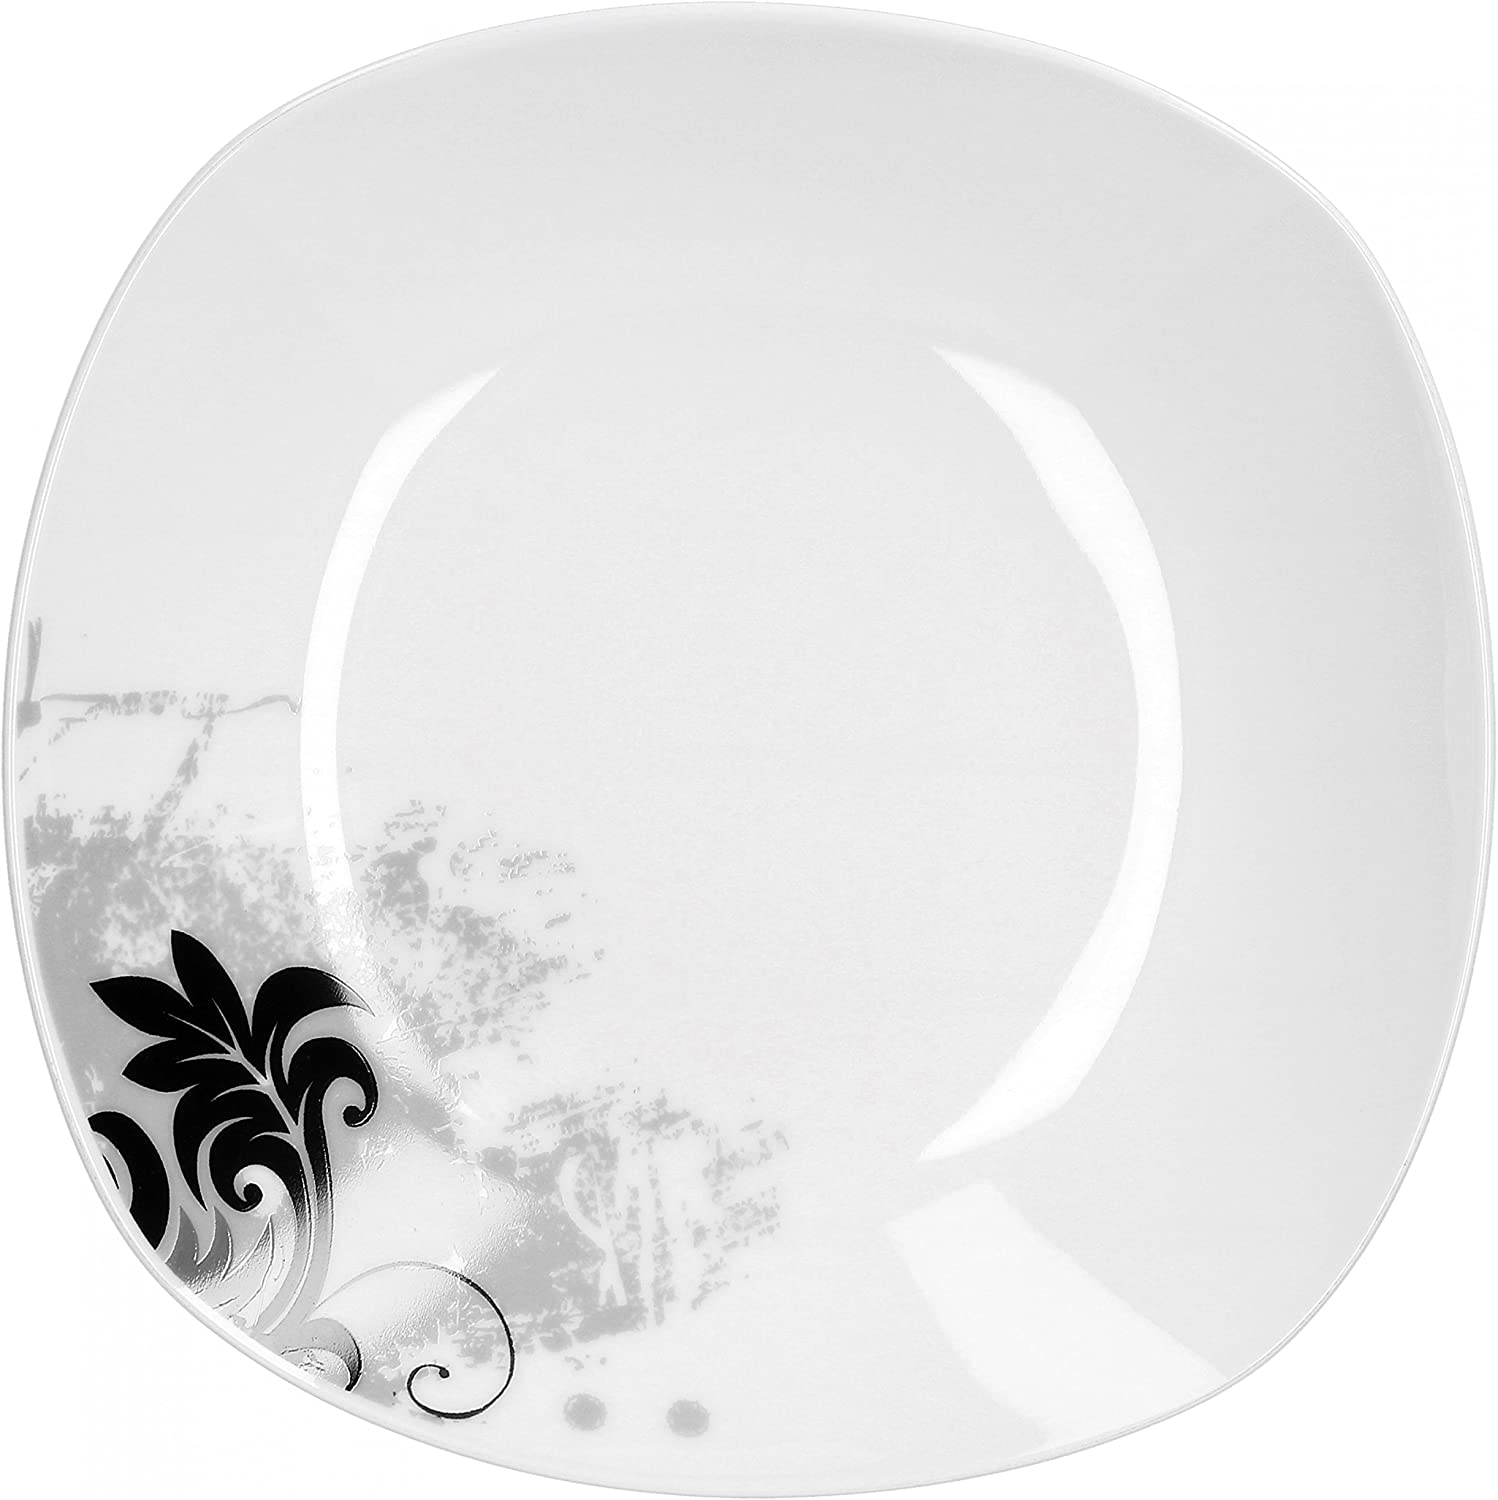 Black Flower Design Soup Plate 22 Cm